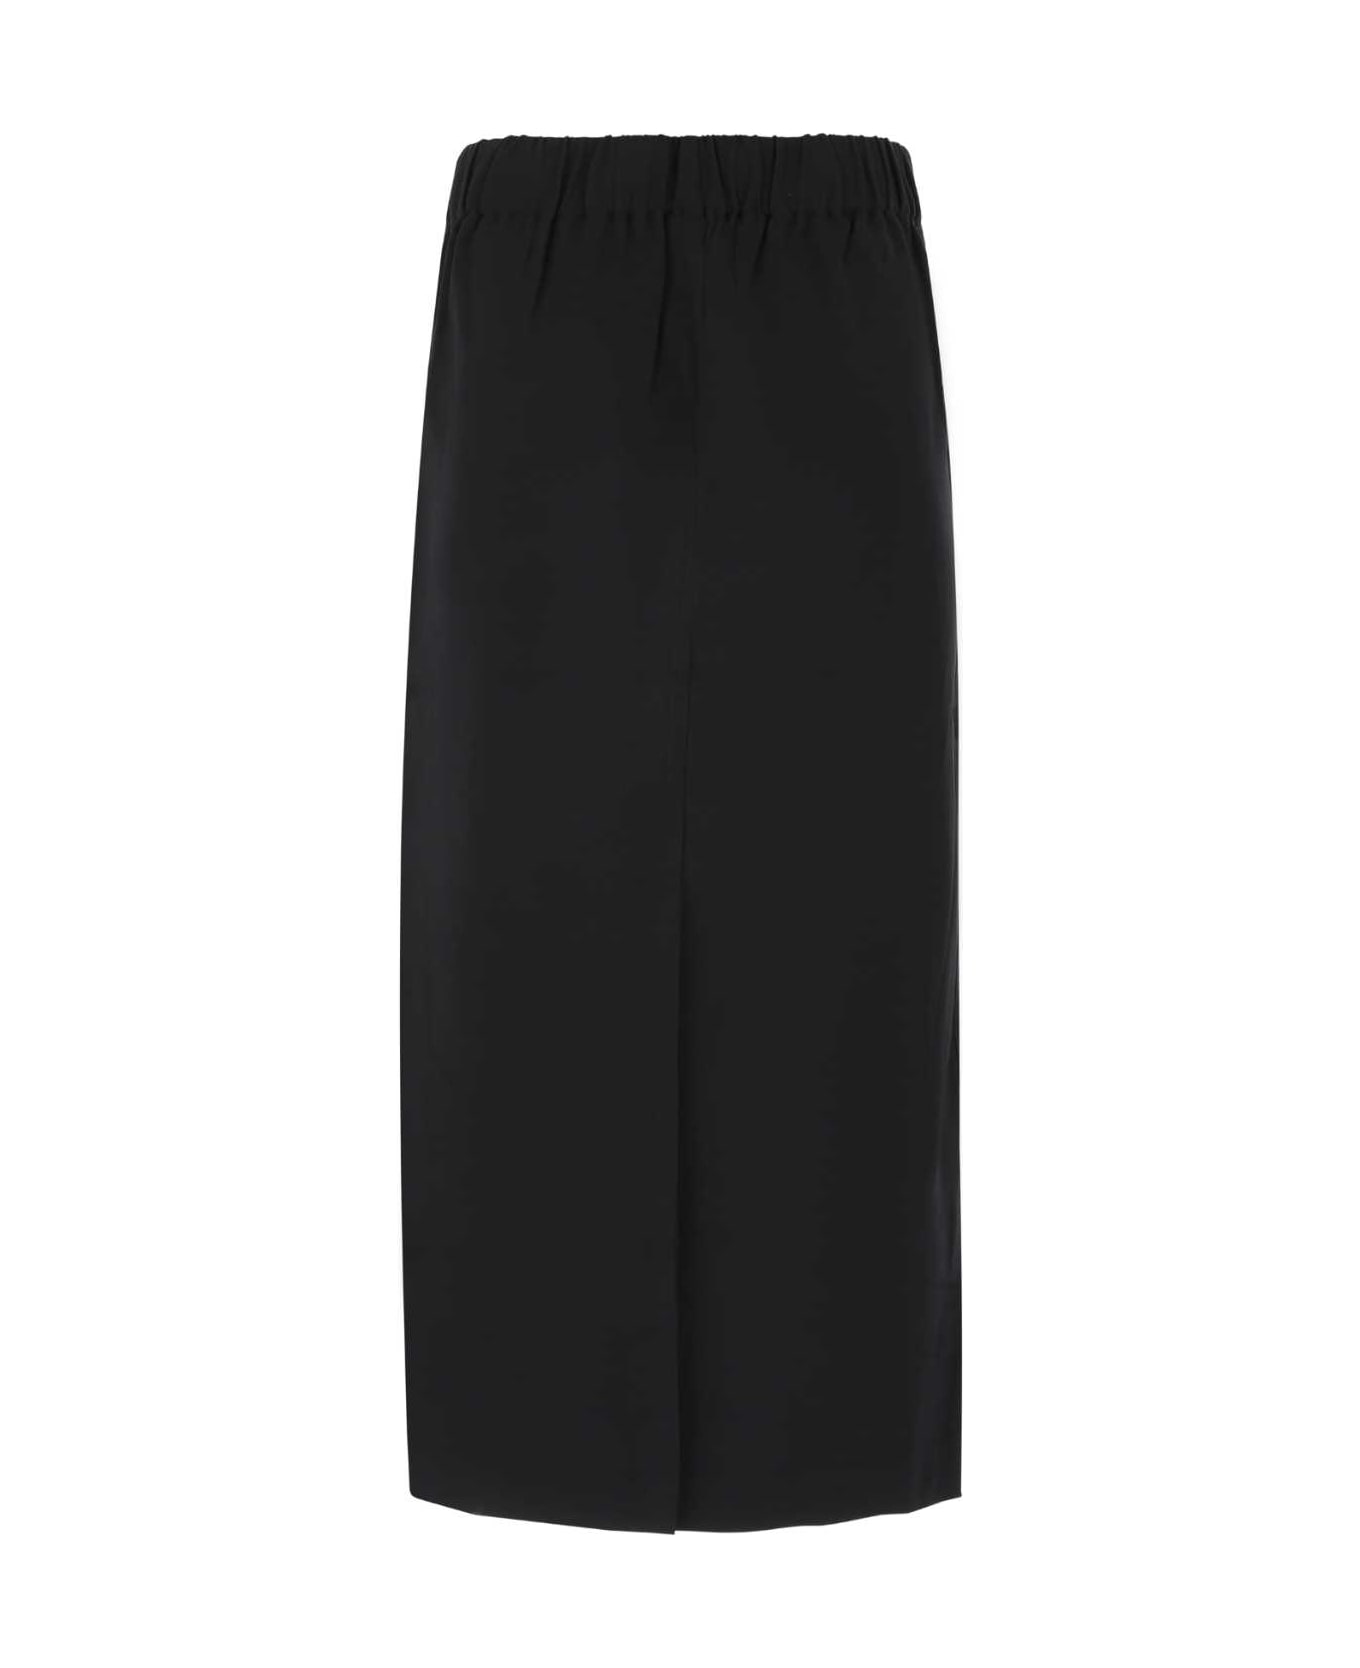 Co Black Stretch Viscose Skirt - BLACK